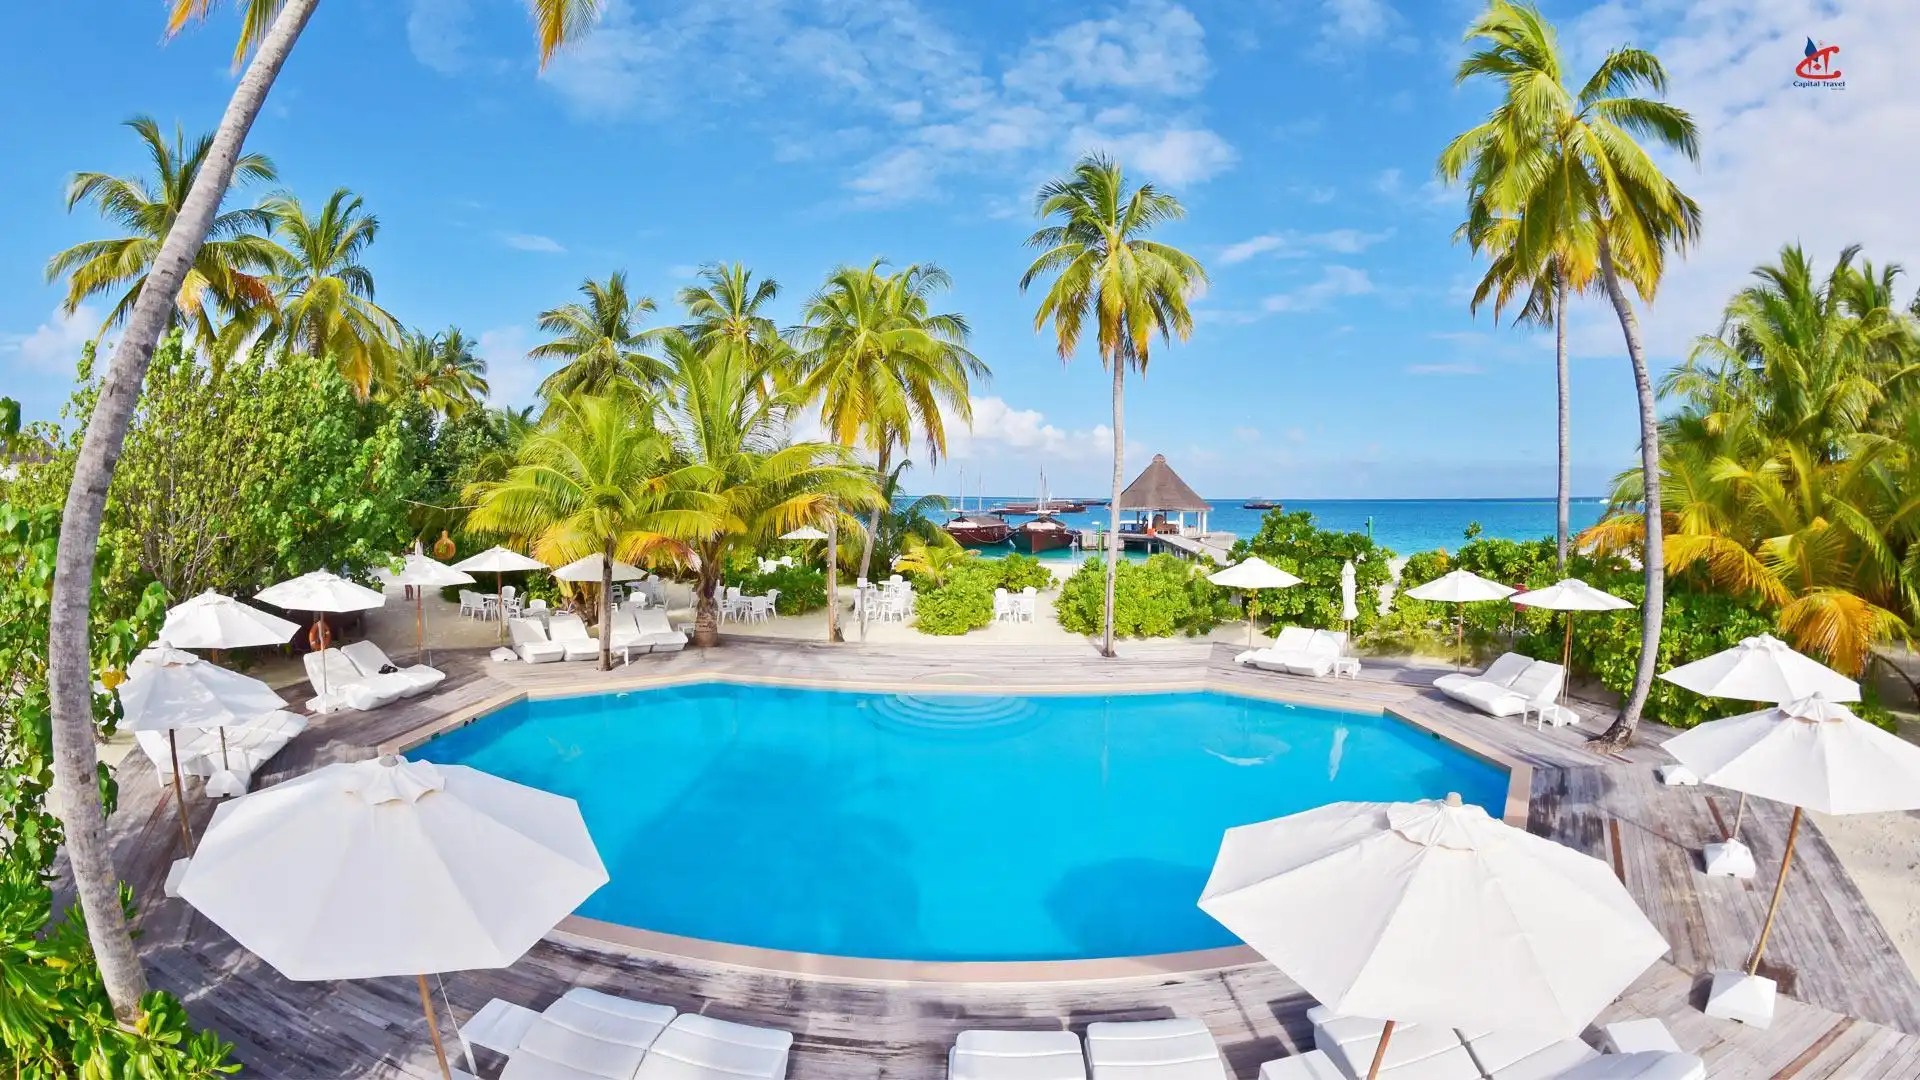 Safari Island Resort and Spa Maldives maldives pool